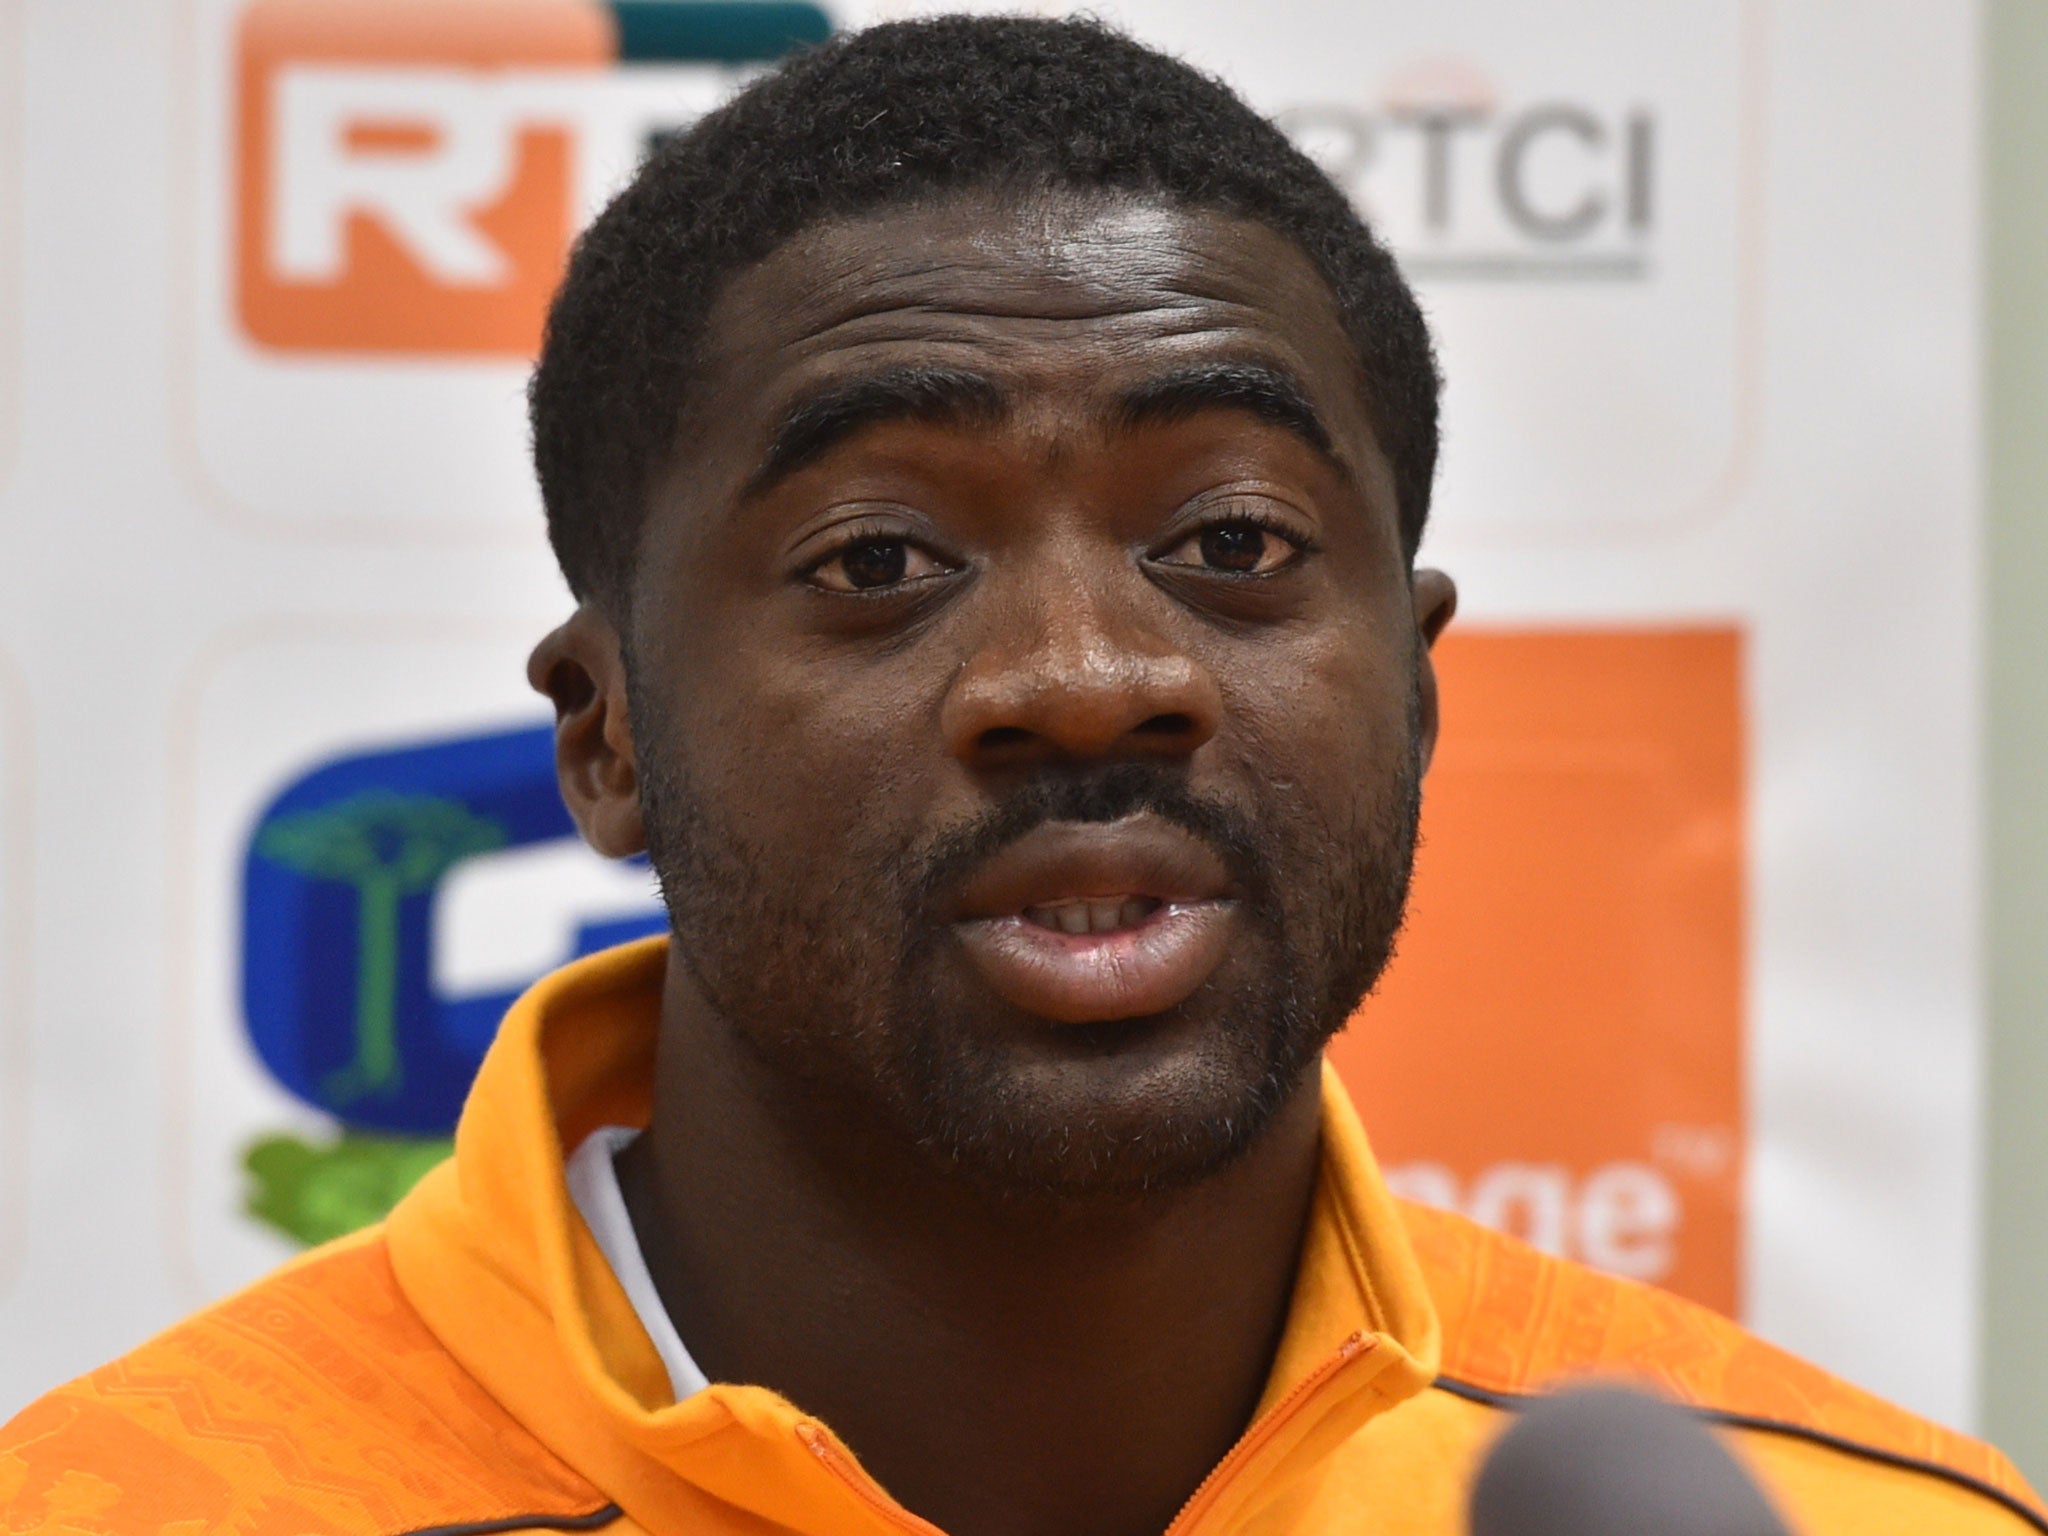 Ivory Coast's defender Kolo Toure gives a press conference